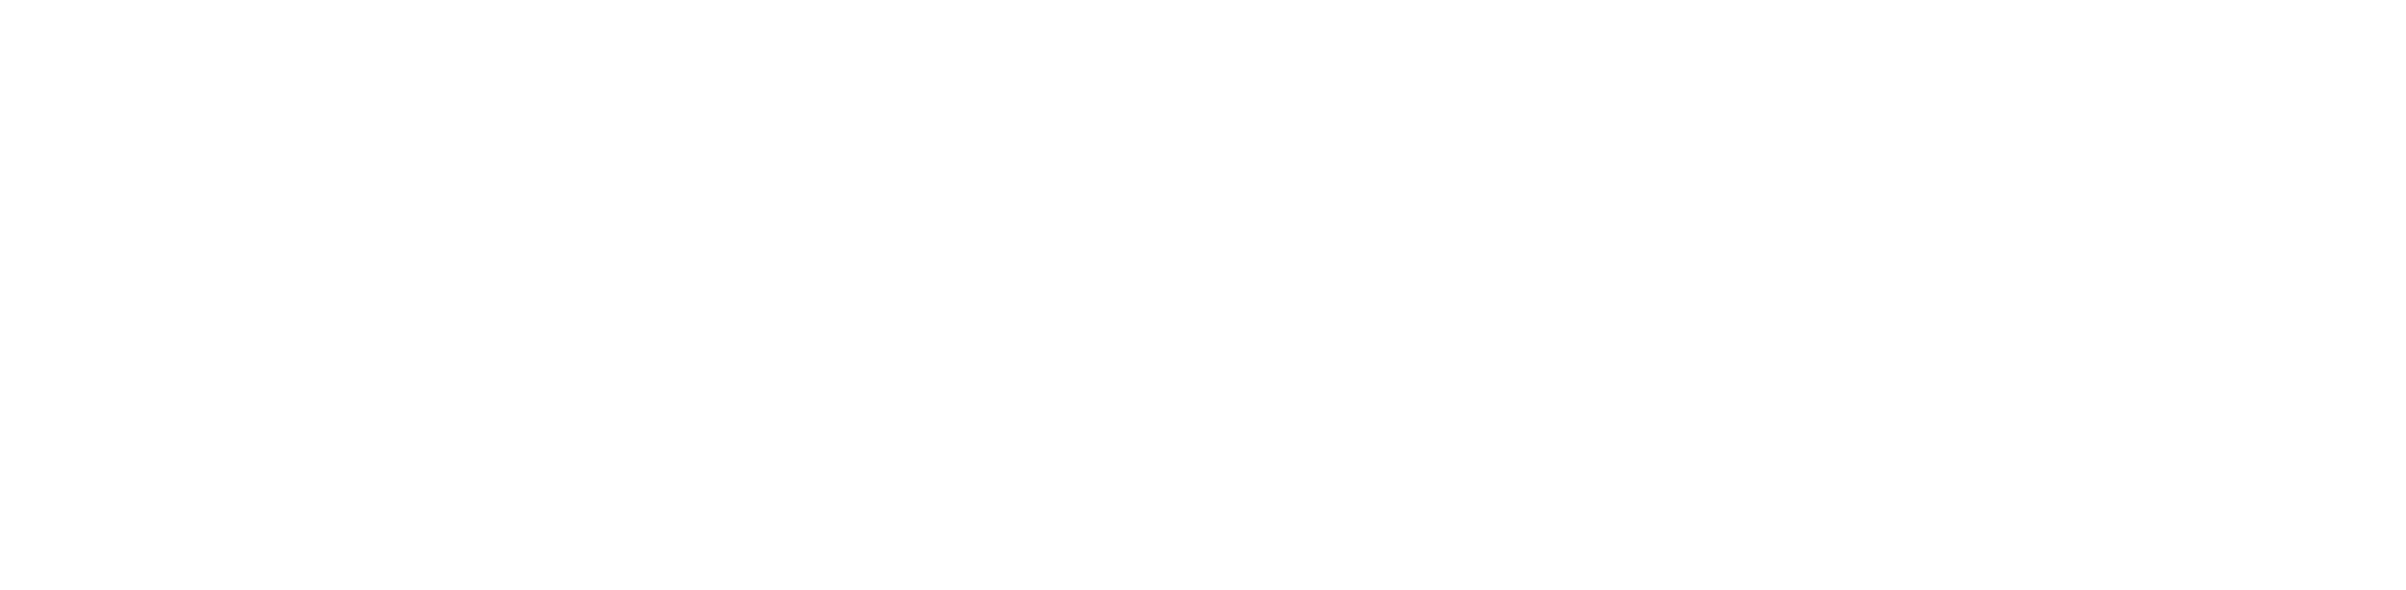 AvantGuard - Logo - Large - White